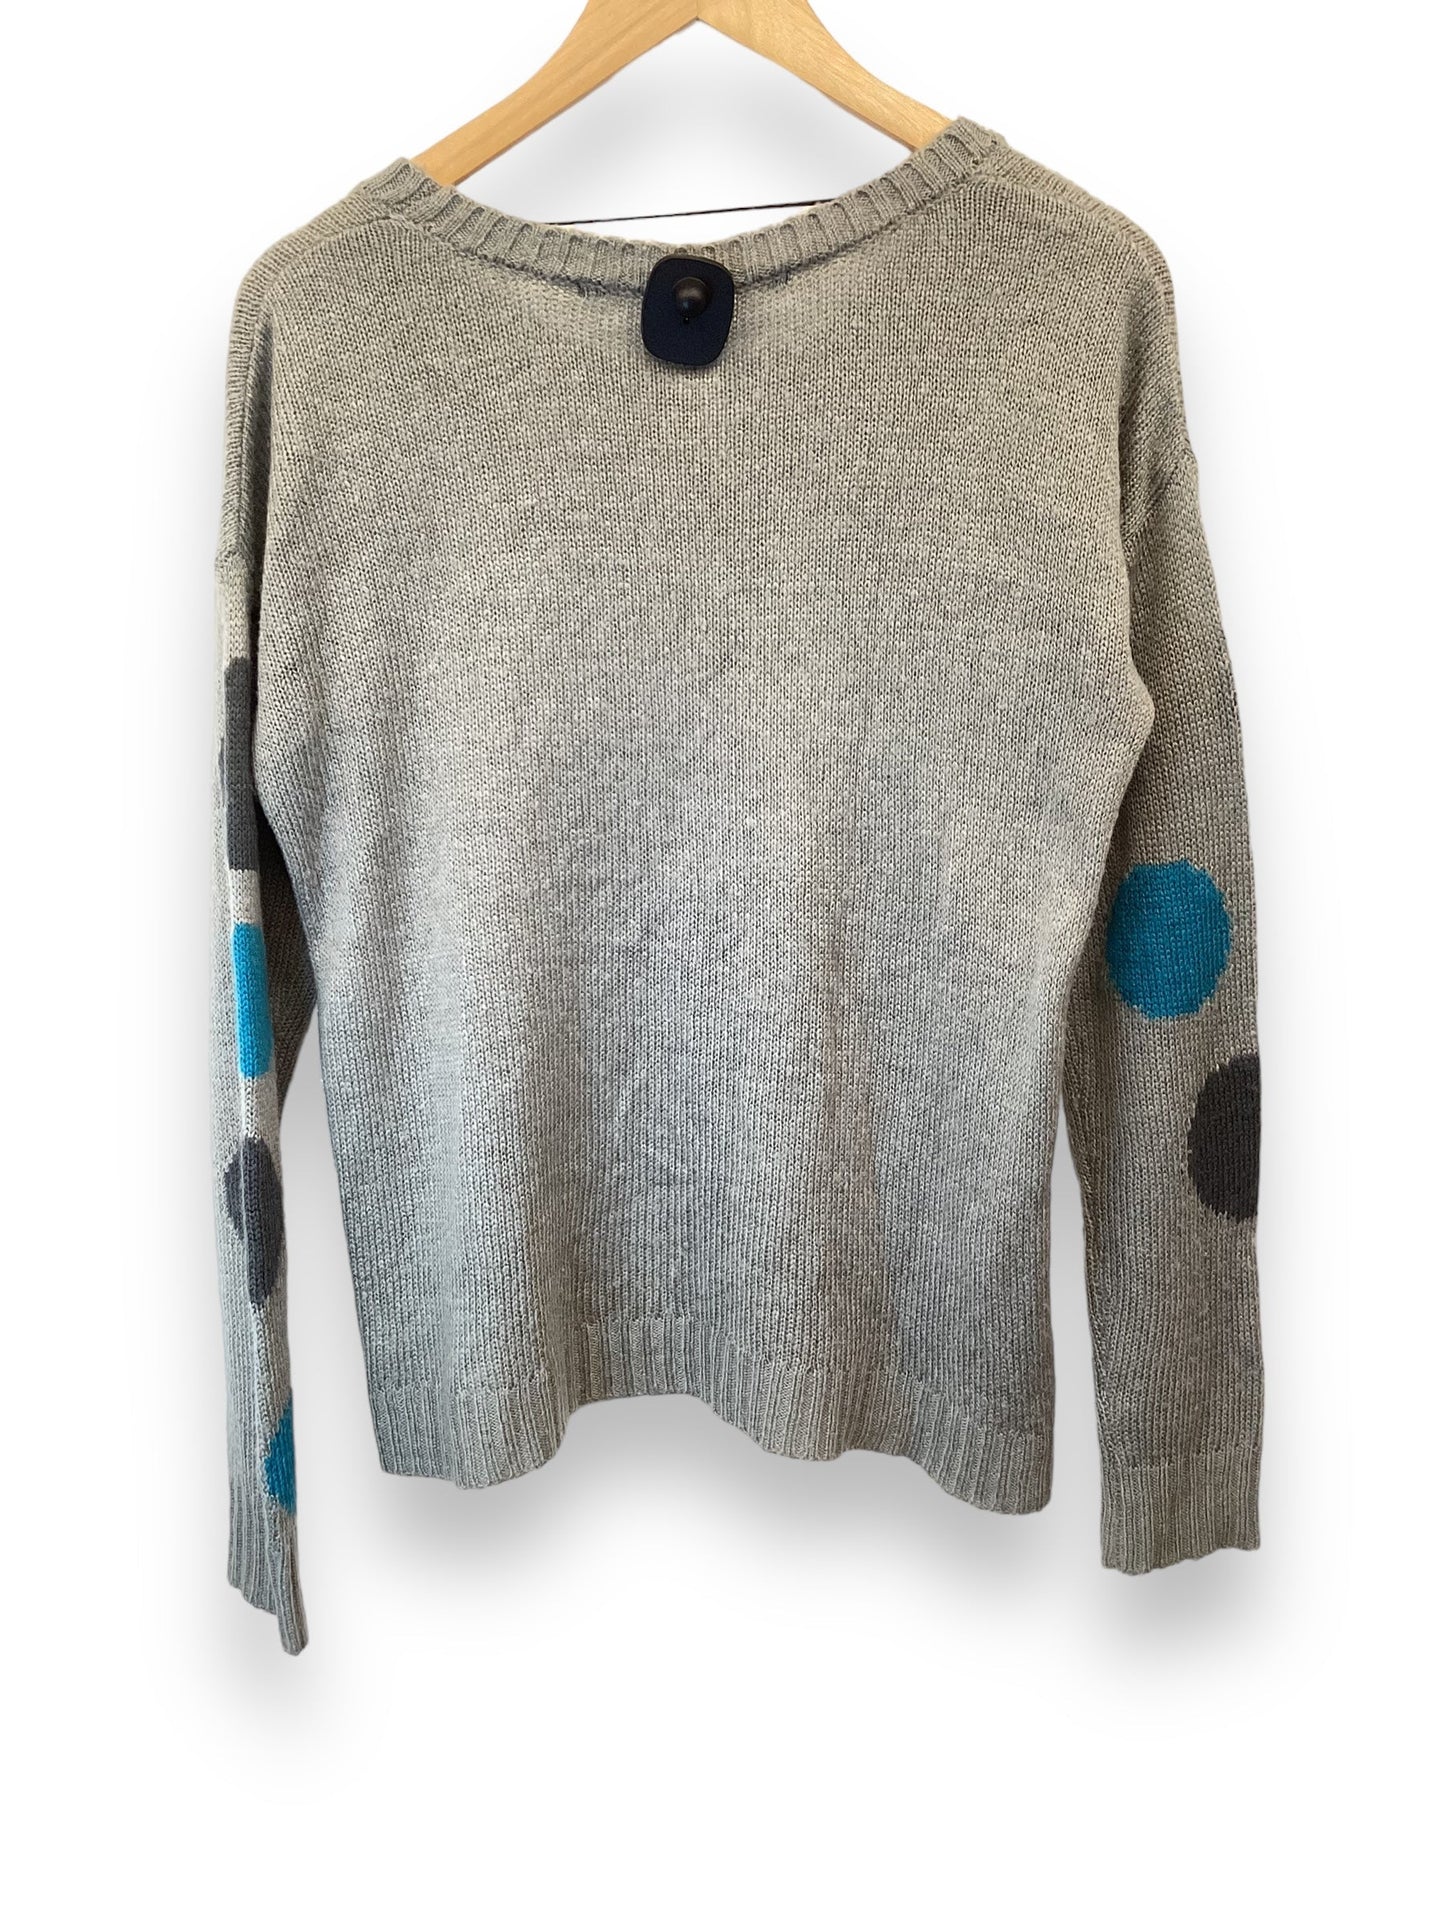 Sweater By Kensie  Size: L